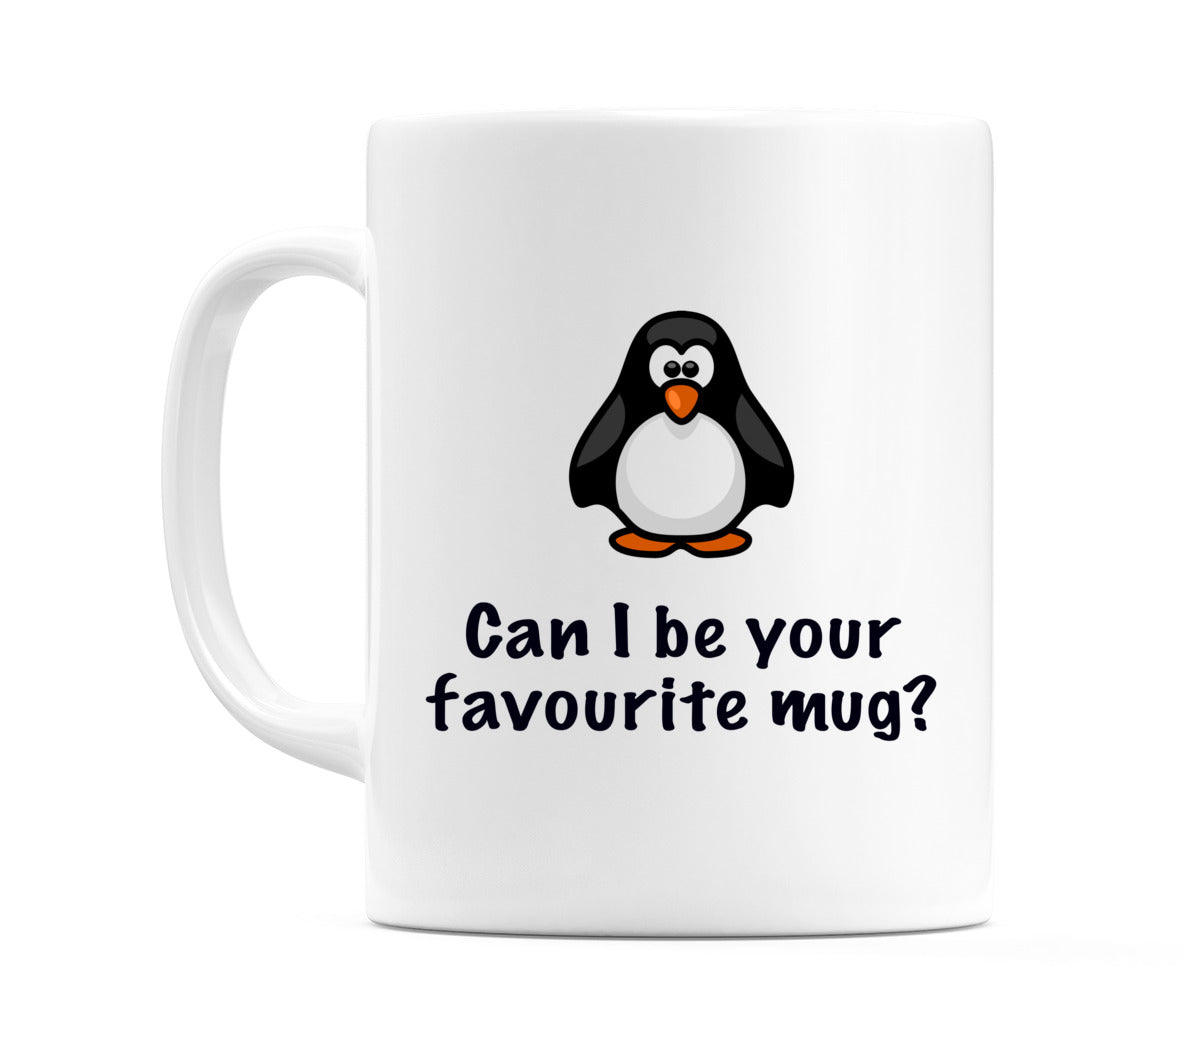 Can I be your favourite mug? Mug